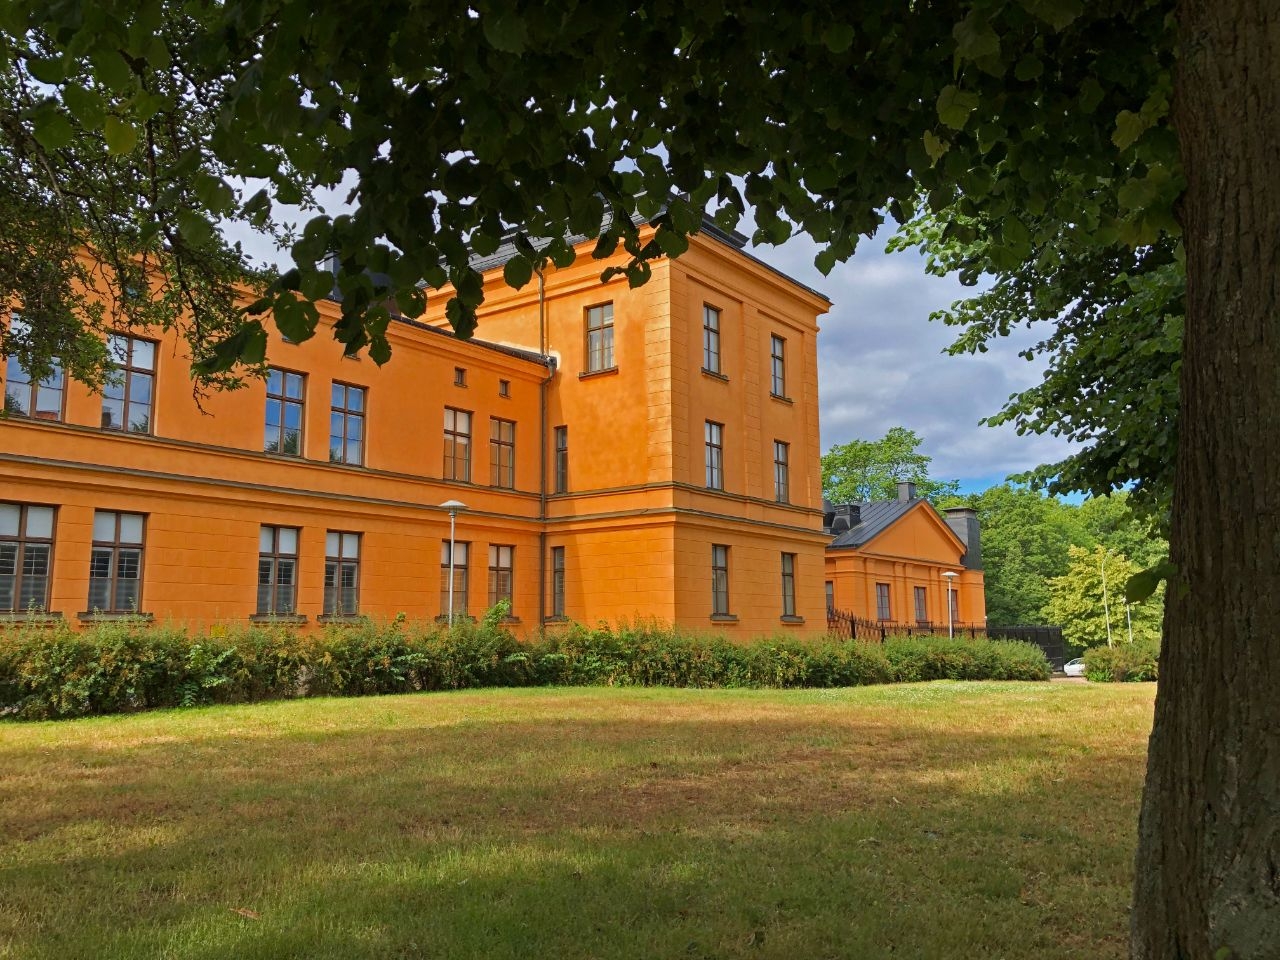 Karlskrona, Historic center on Island of Trossö (UNESCO#871)